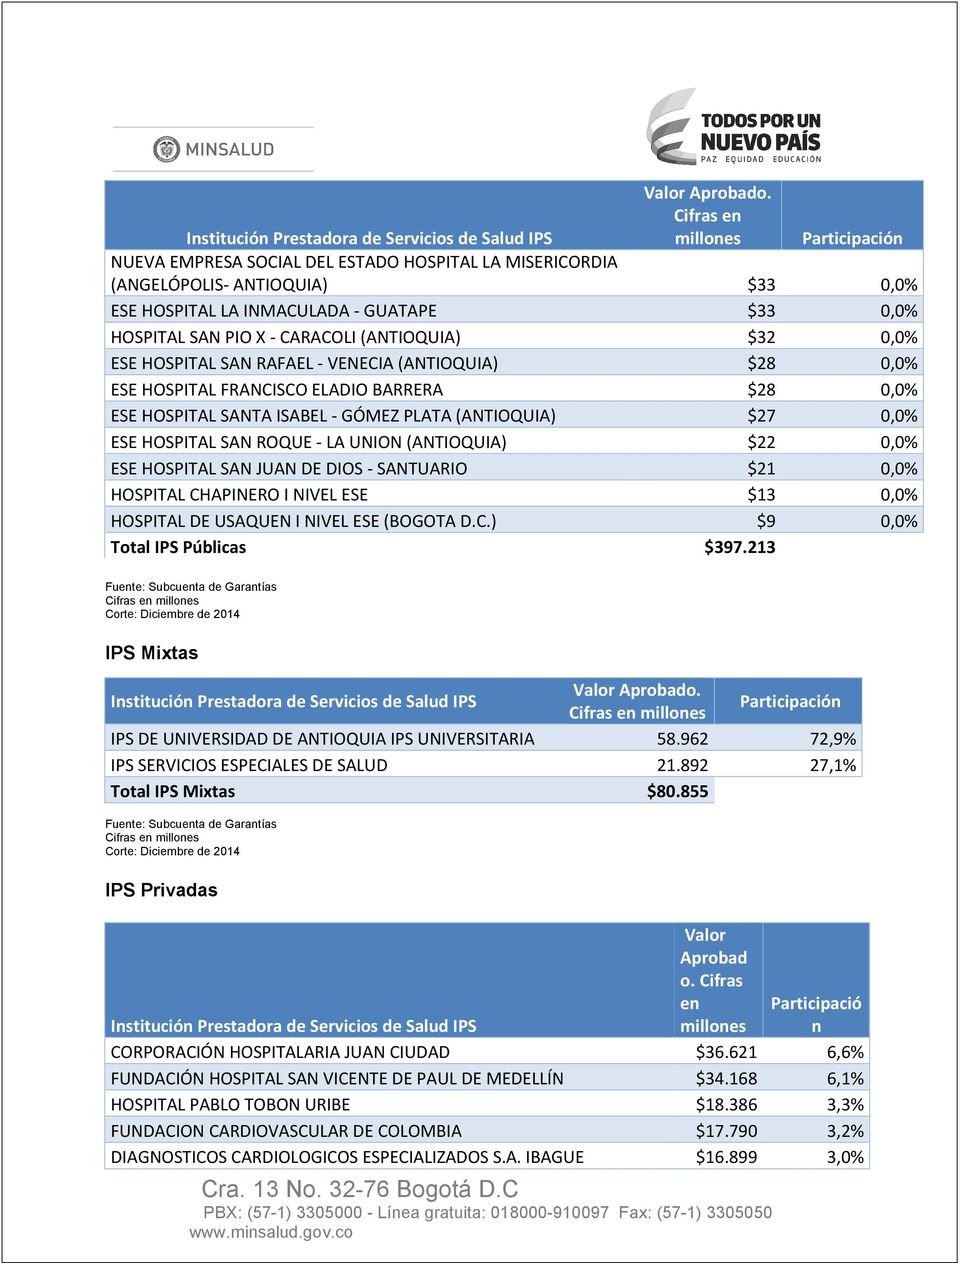 (ANTIOQUIA) $32 0,0% ESE HOSPITAL SAN RAFAEL - VENECIA (ANTIOQUIA) $28 0,0% ESE HOSPITAL FRANCISCO ELADIO BARRERA $28 0,0% ESE HOSPITAL SANTA ISABEL - GÓMEZ PLATA (ANTIOQUIA) $27 0,0% ESE HOSPITAL